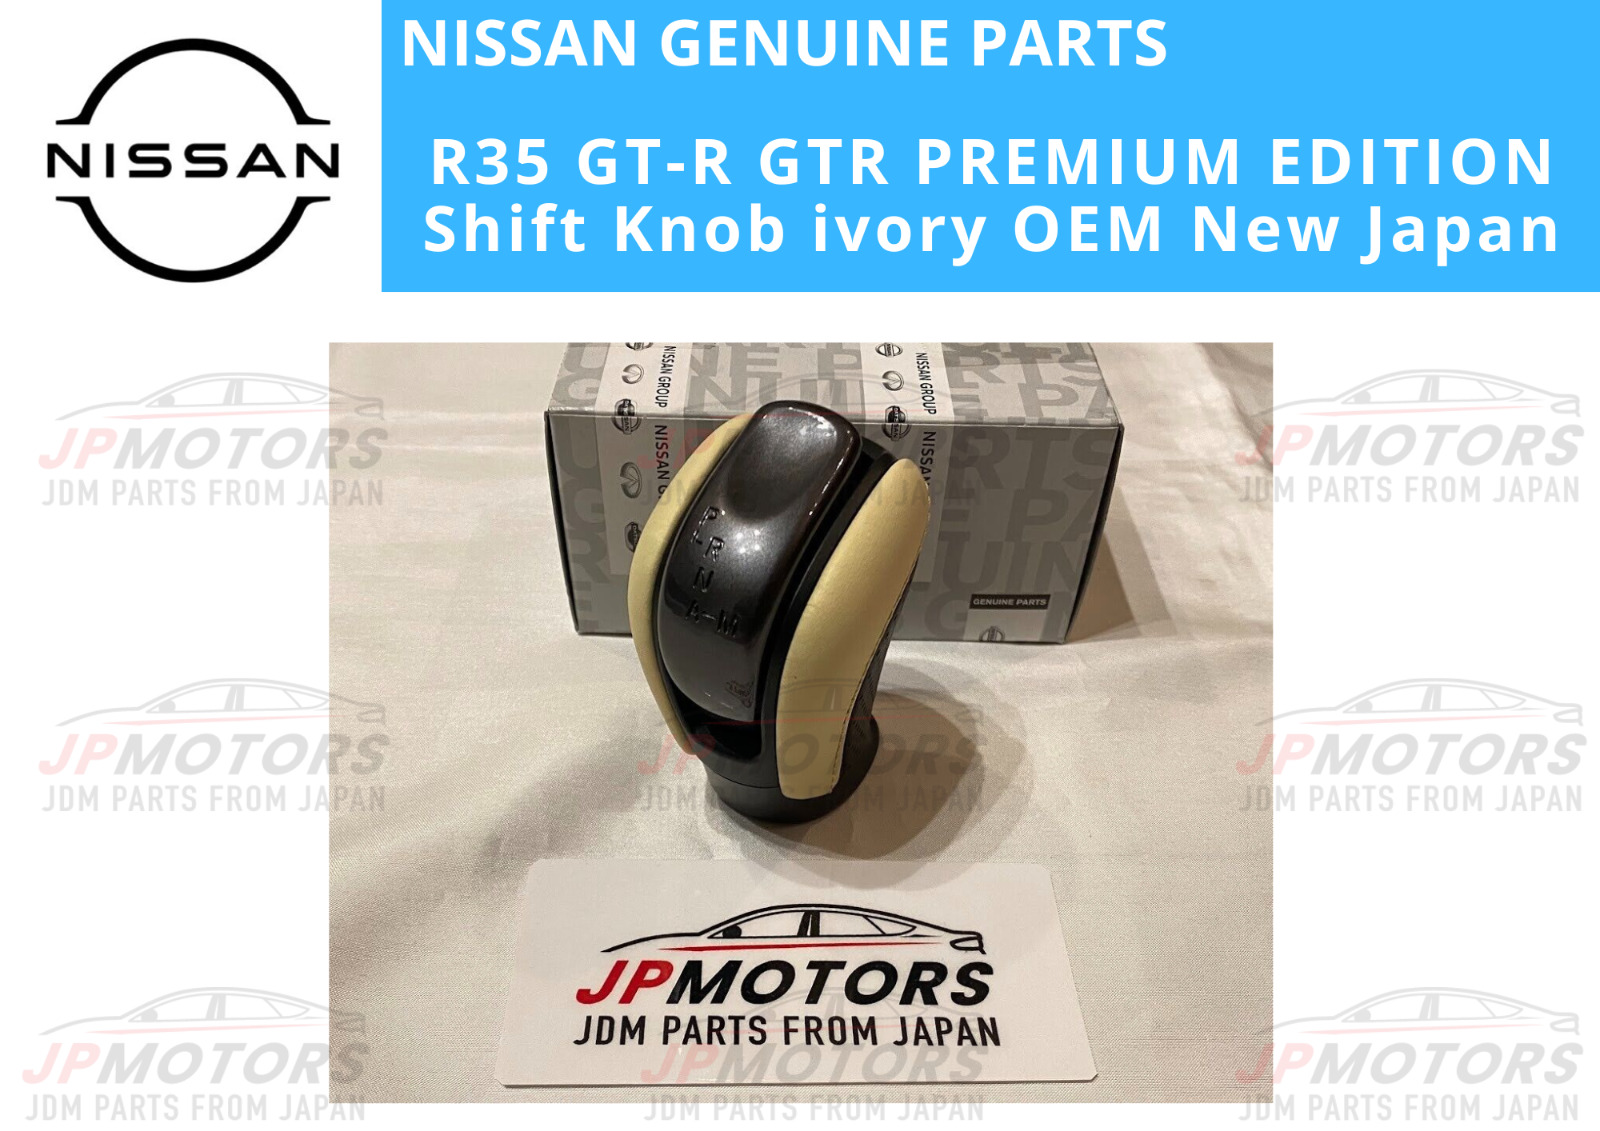 Nissan Genuine R35 GT-R GTR PREMIUM EDITION Shift Knob ivory OEM New Japan